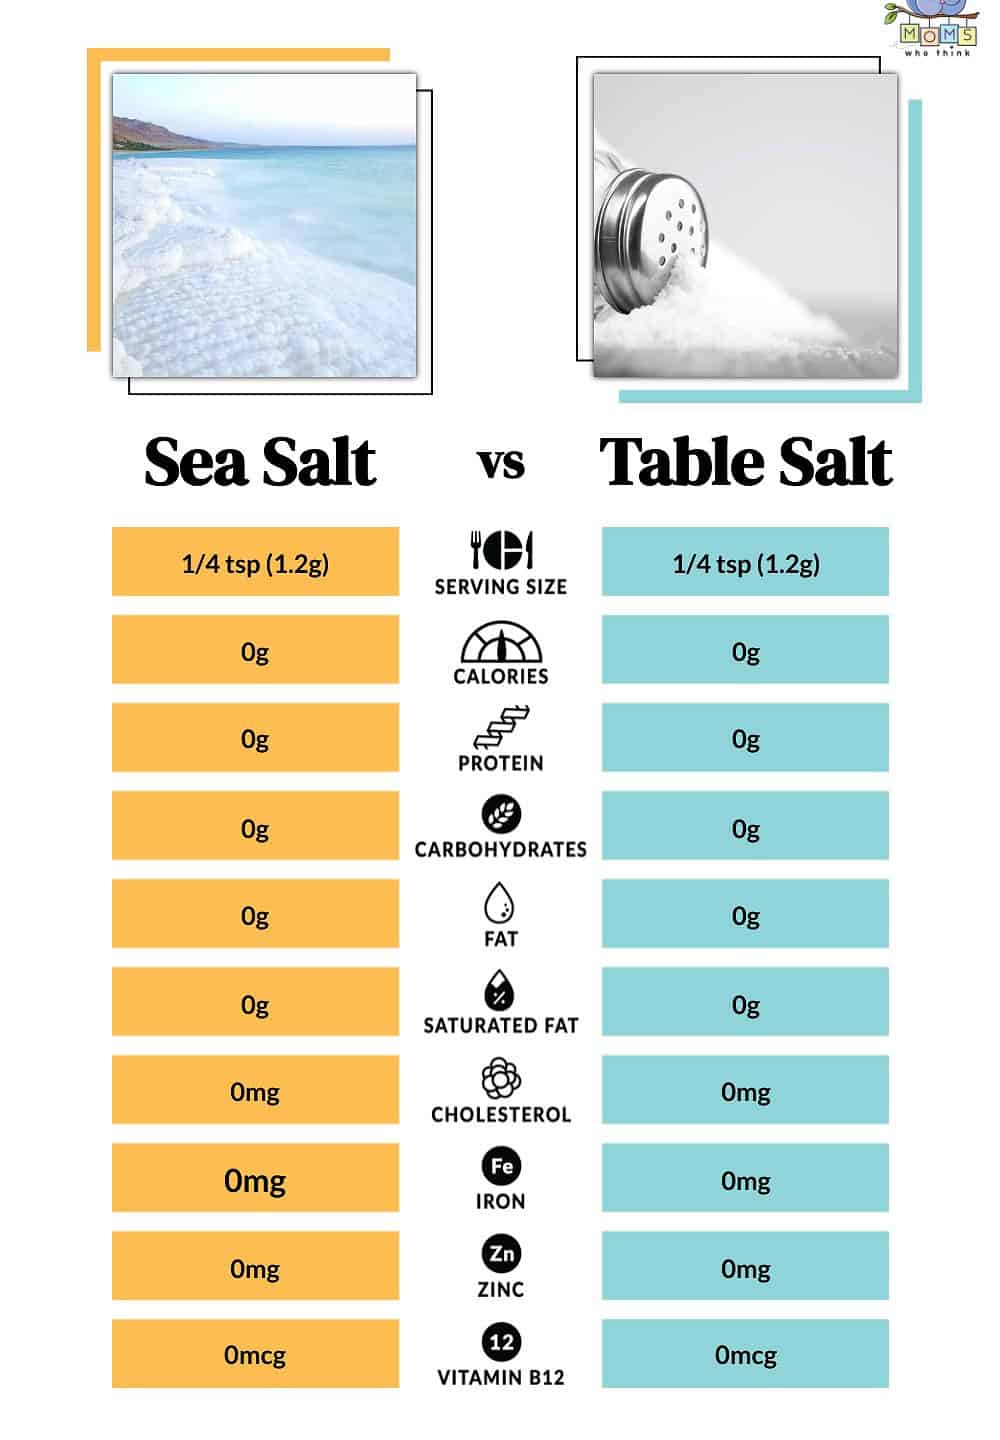 Sea Salt vs Table Salt Nutritional Facts